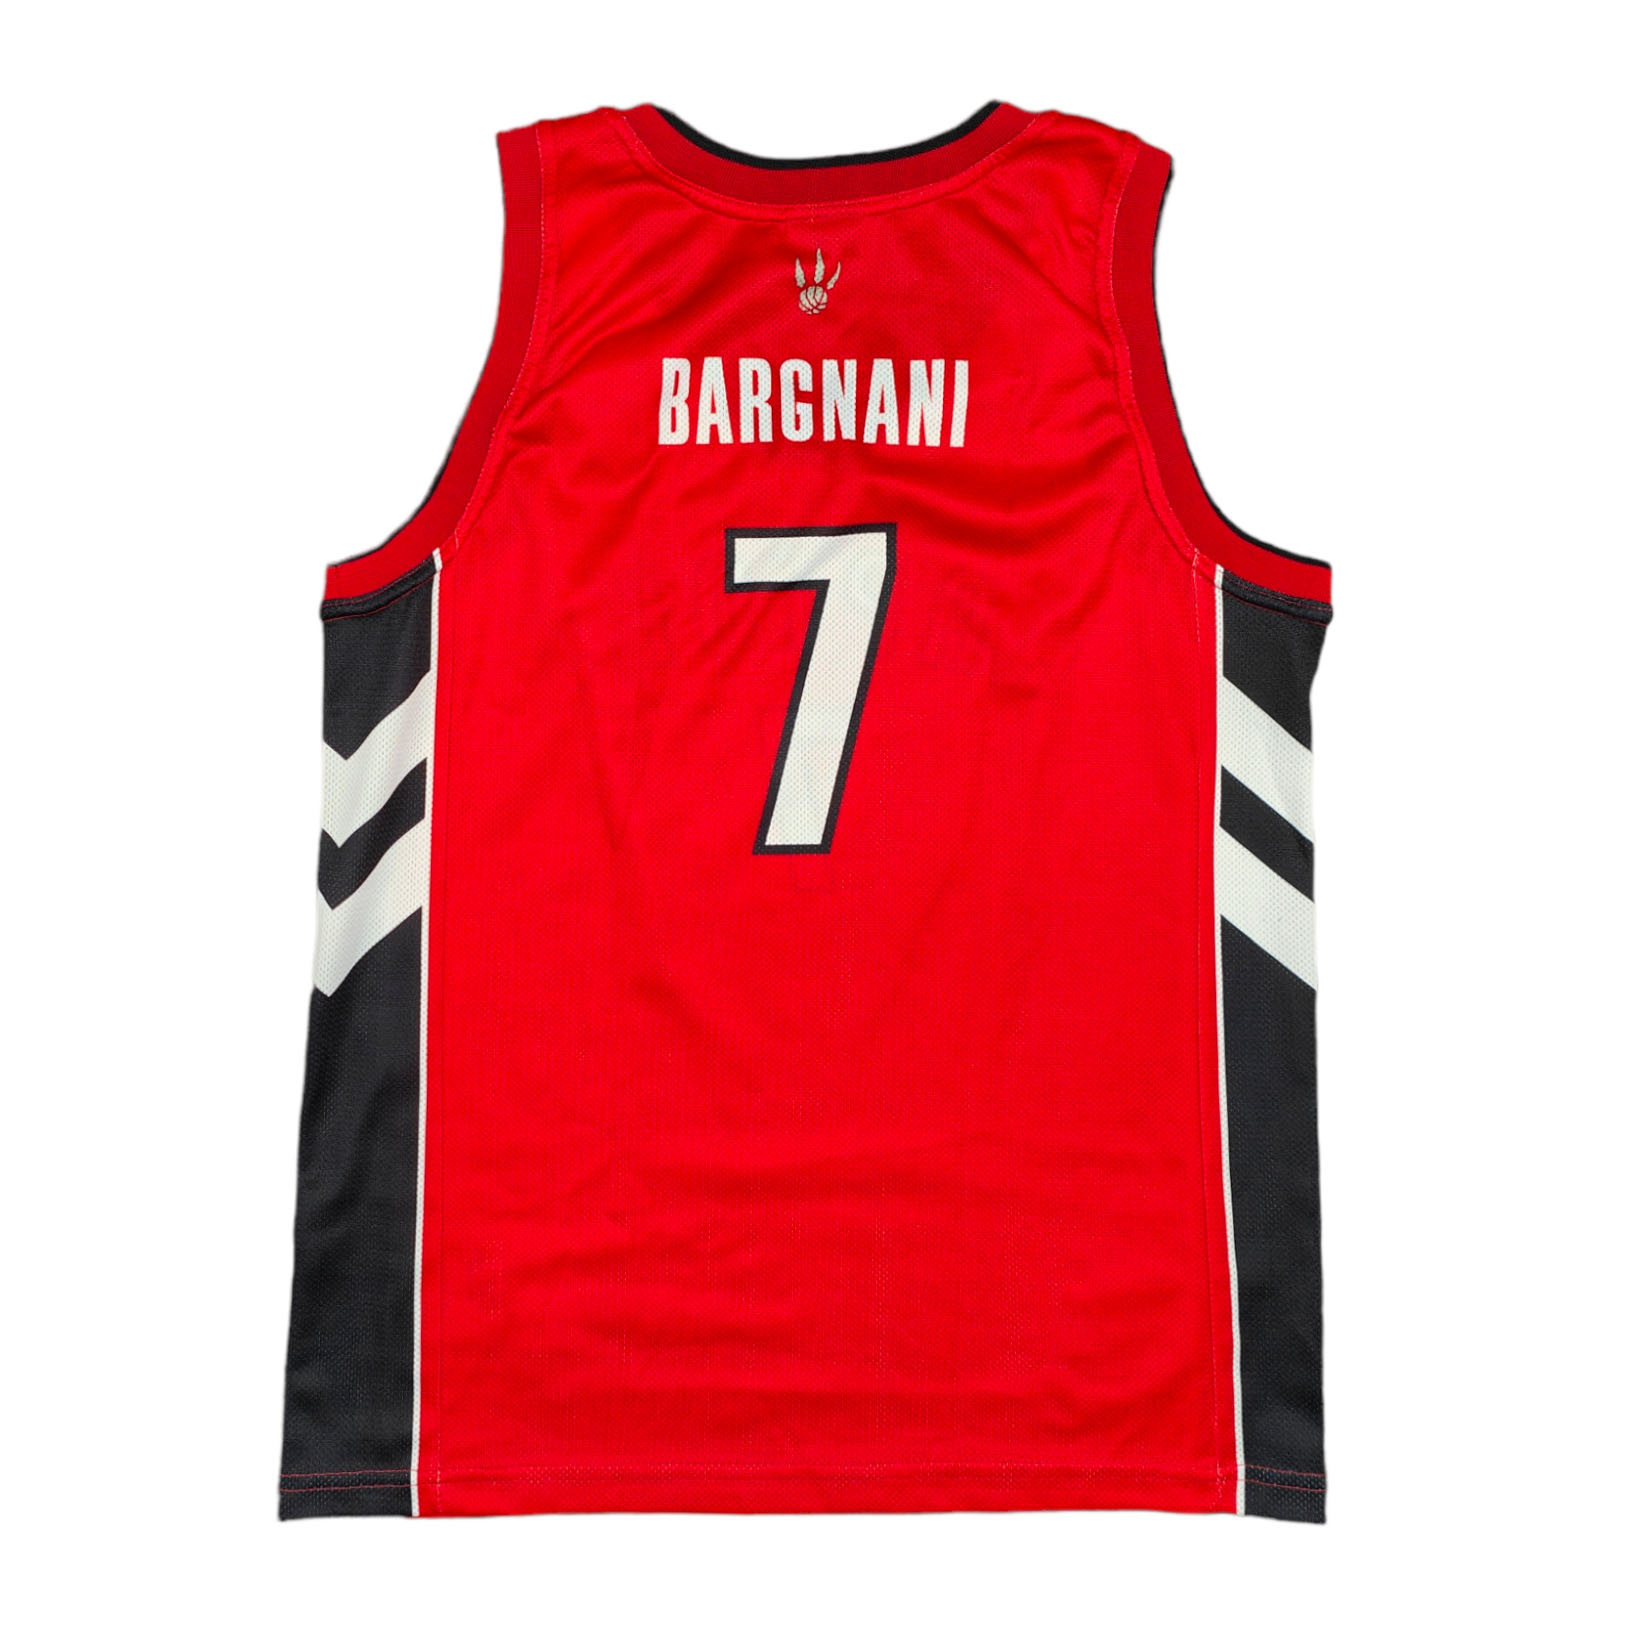 2006-10 Toronto Raptors Bargnani #7 Champion Home Jersey (Excellent) L